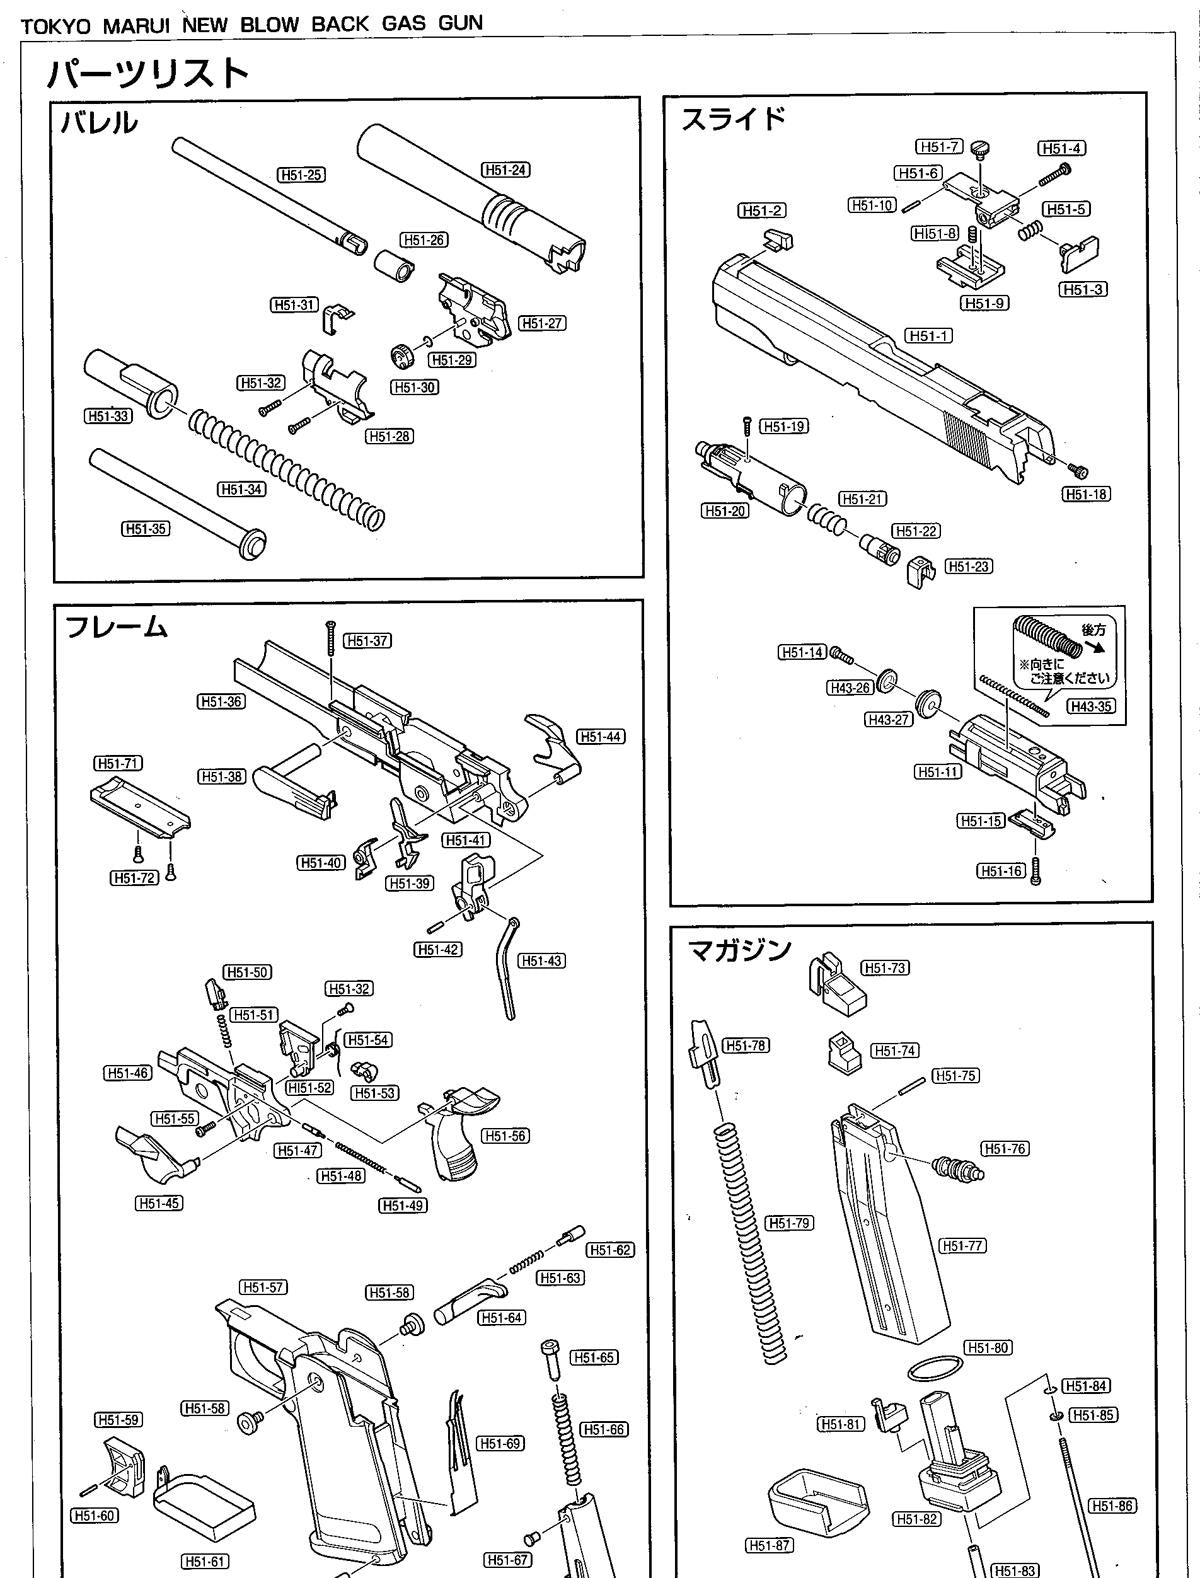 Tokyo Marui Hi-Capa - Replacement Part H43-11, H51-46, H51-55 - Upper Frame Set